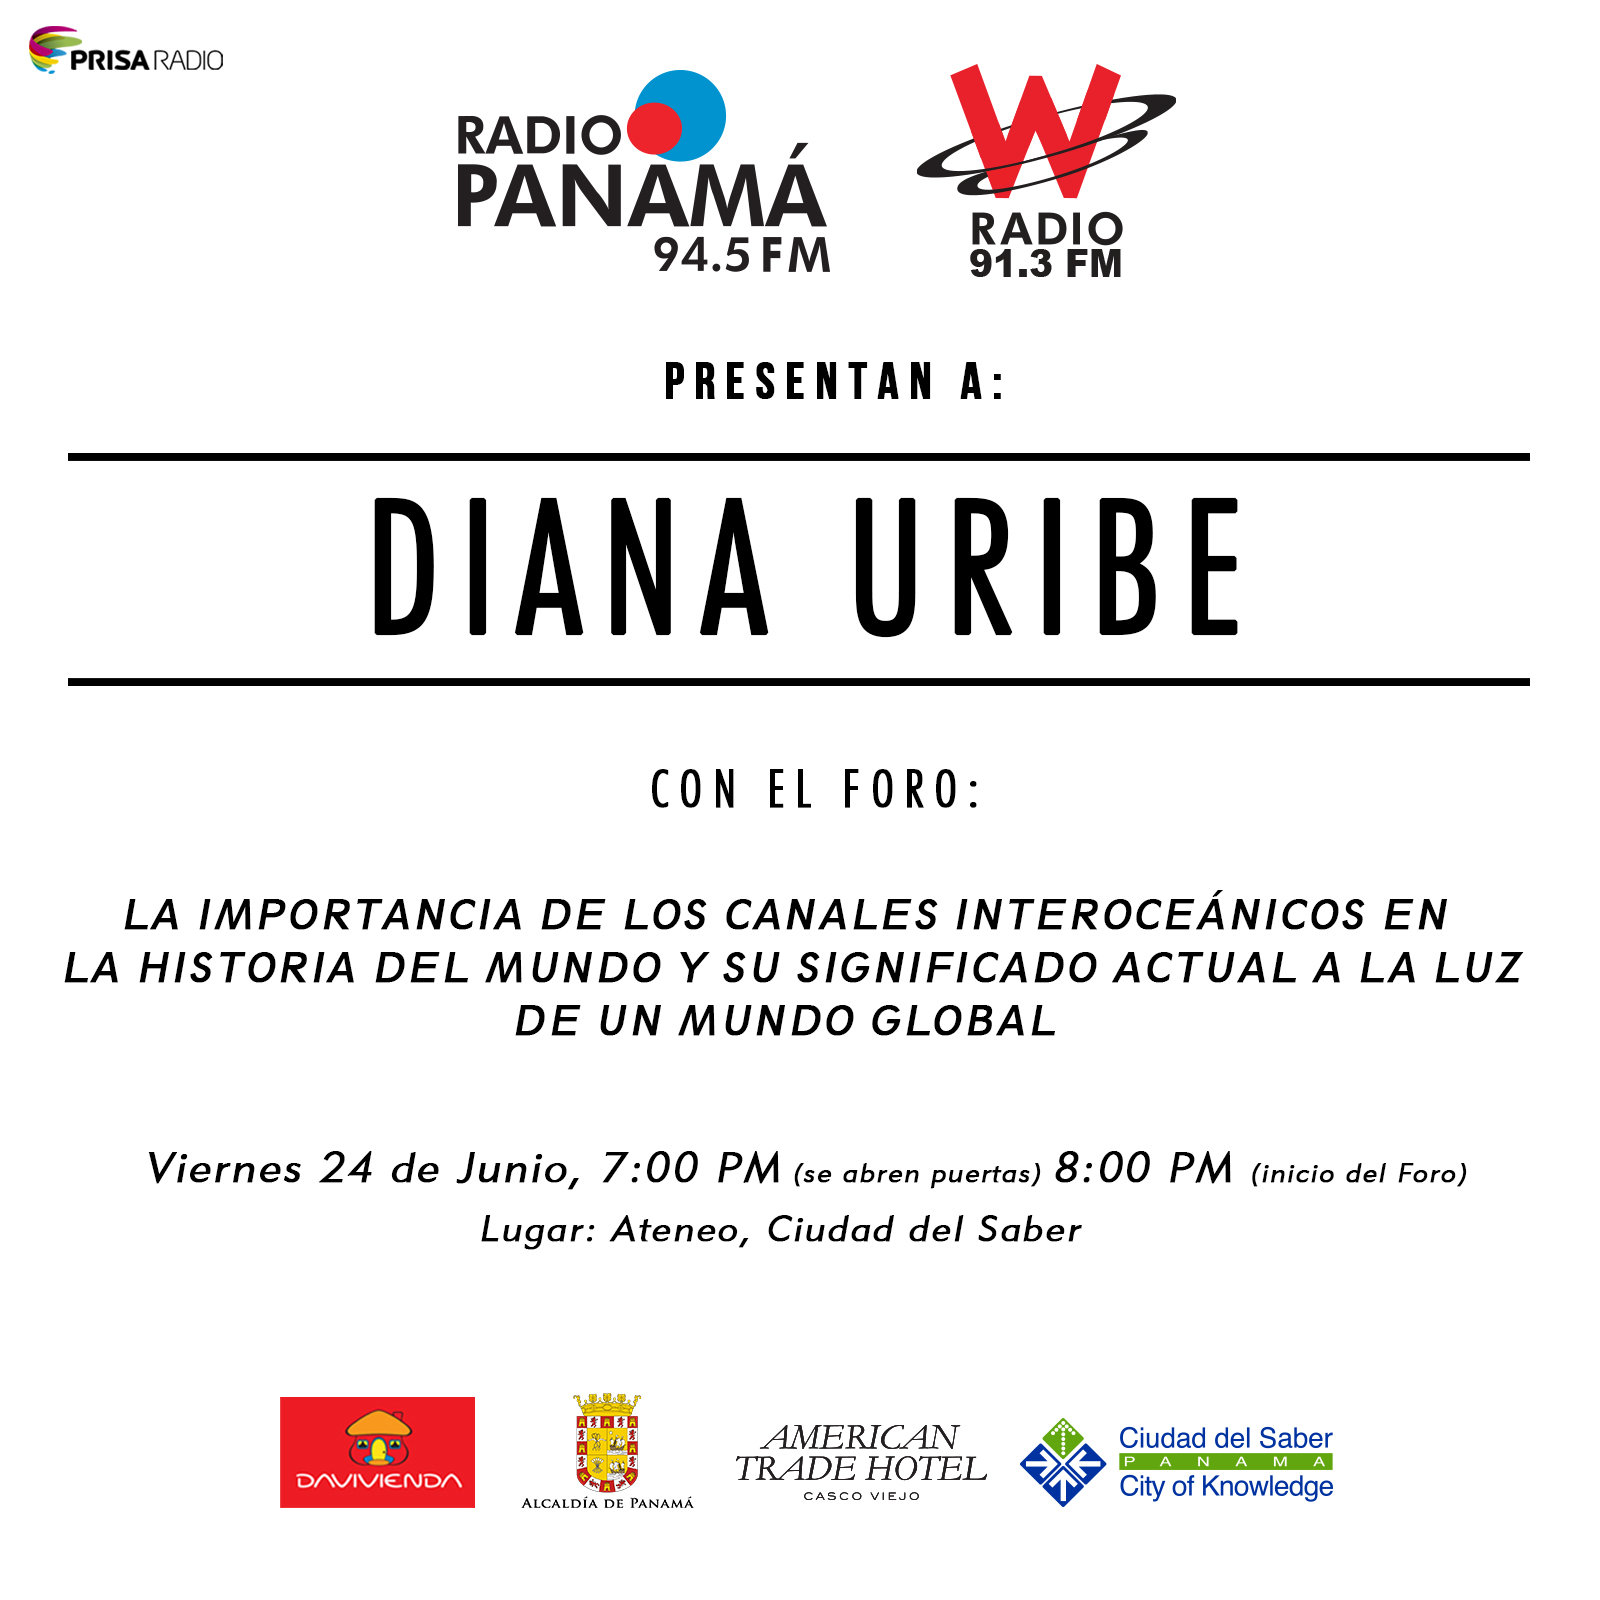 Noticia Radio Panamá | Radio Panamá presenta a Diana Uribe en foro Magistral